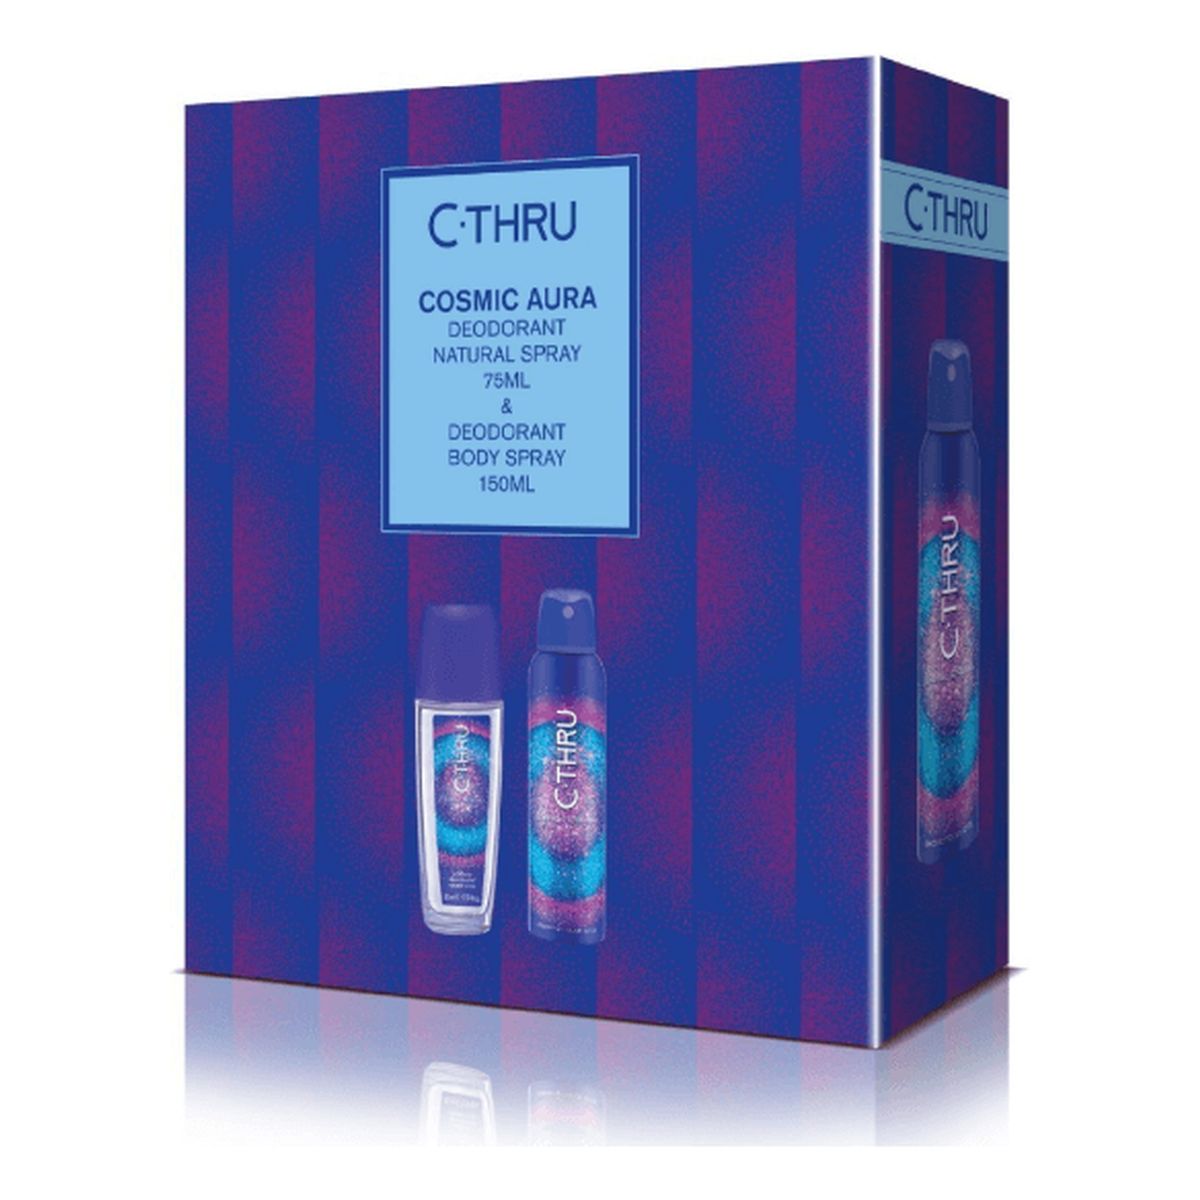 C-Thru Zestaw prezentowy Cosmic Aura (Dezodorant 150 ml + Dezodorant 75ml)